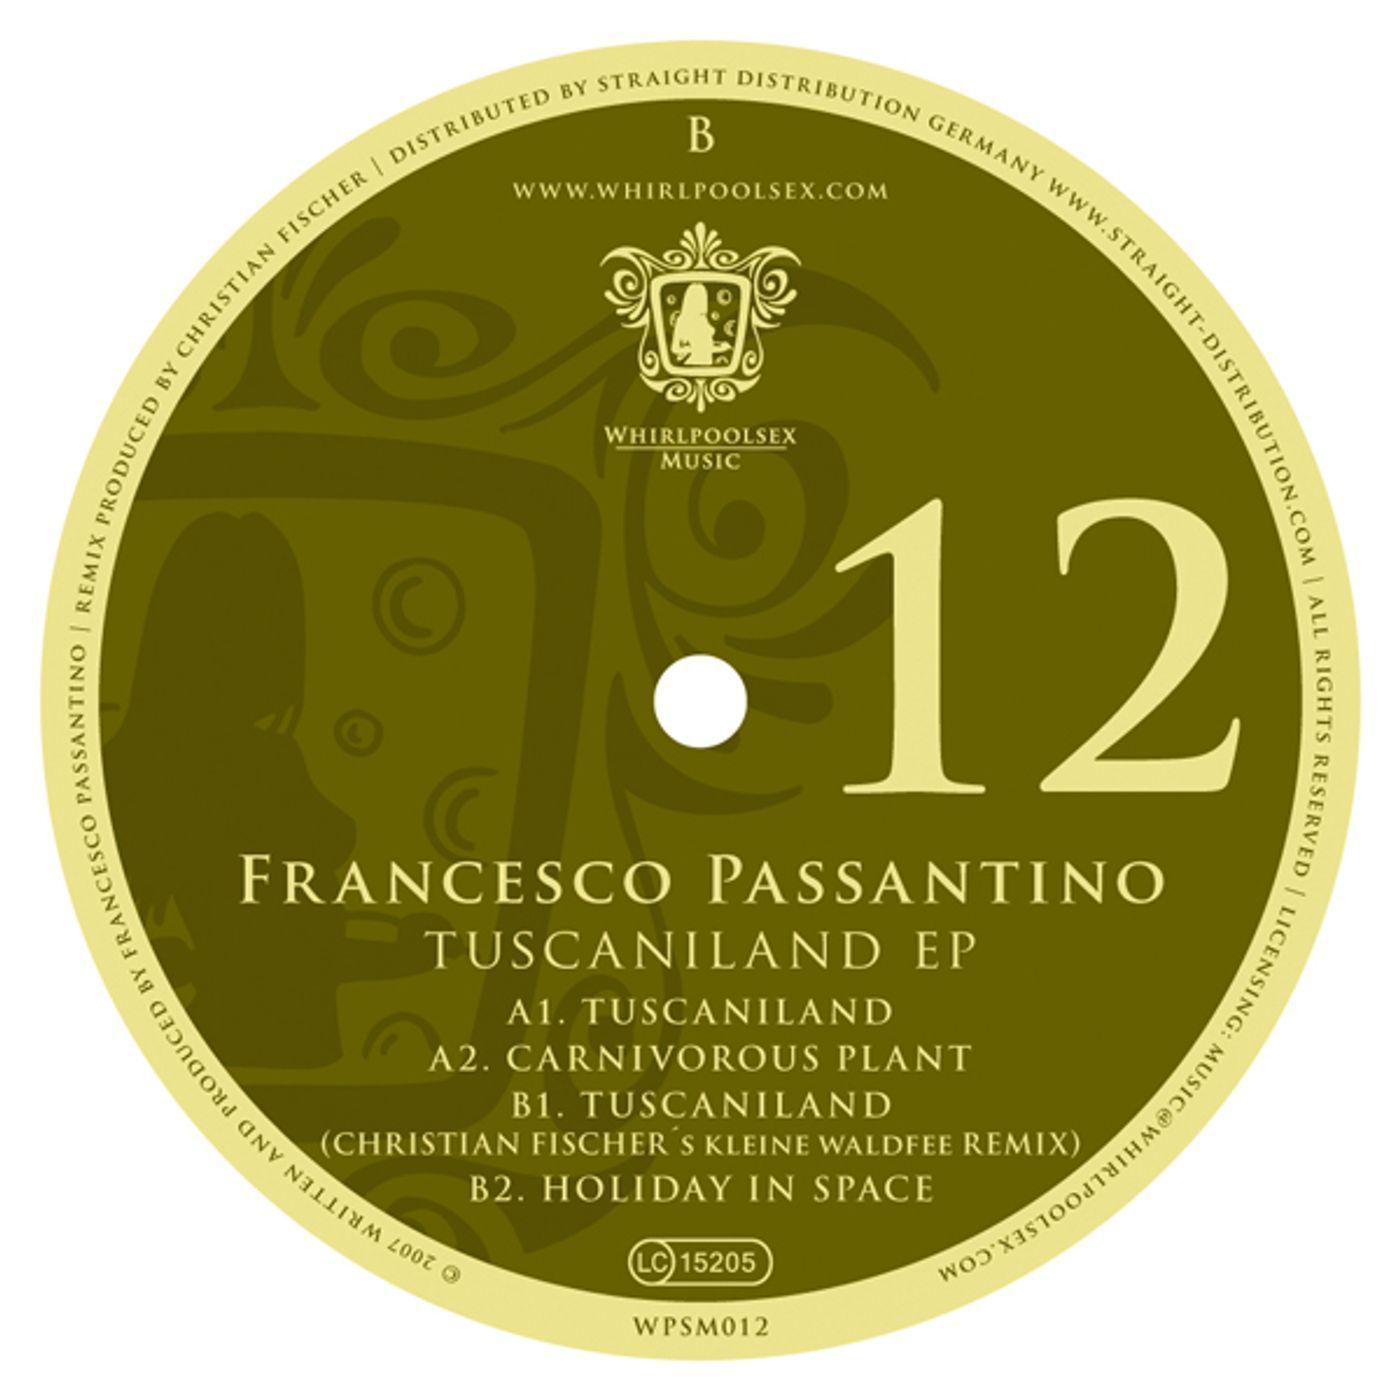 Francesco Passantino - Tuscaniland (Christian Fischer's Kleine Waldfee Remix)